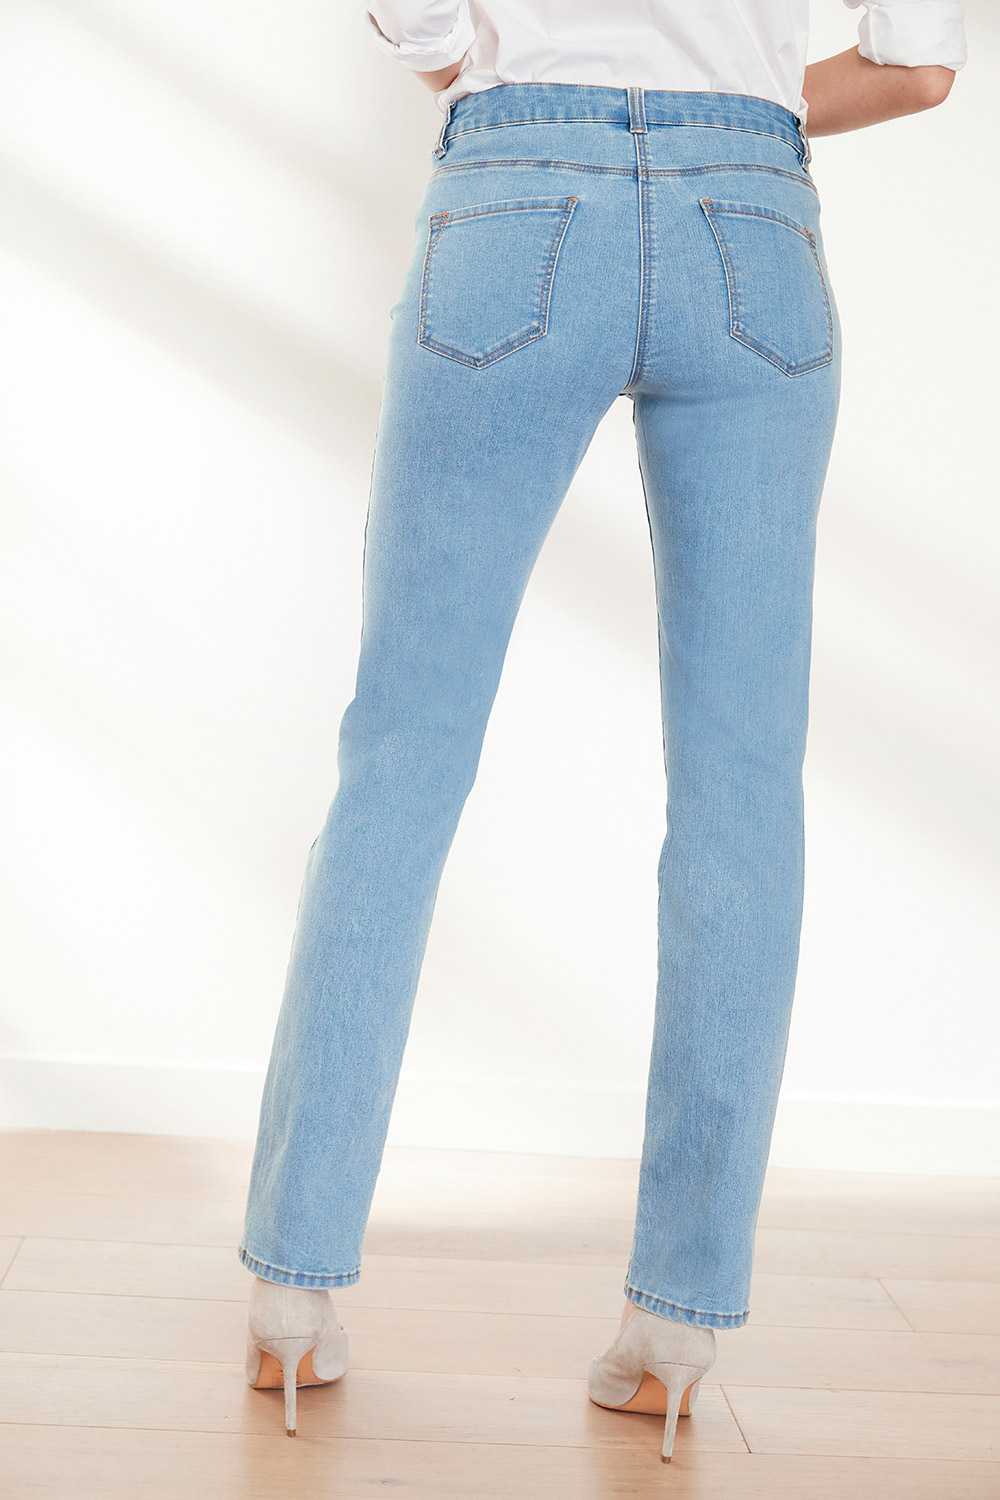 tommy hilfiger light blue jeans